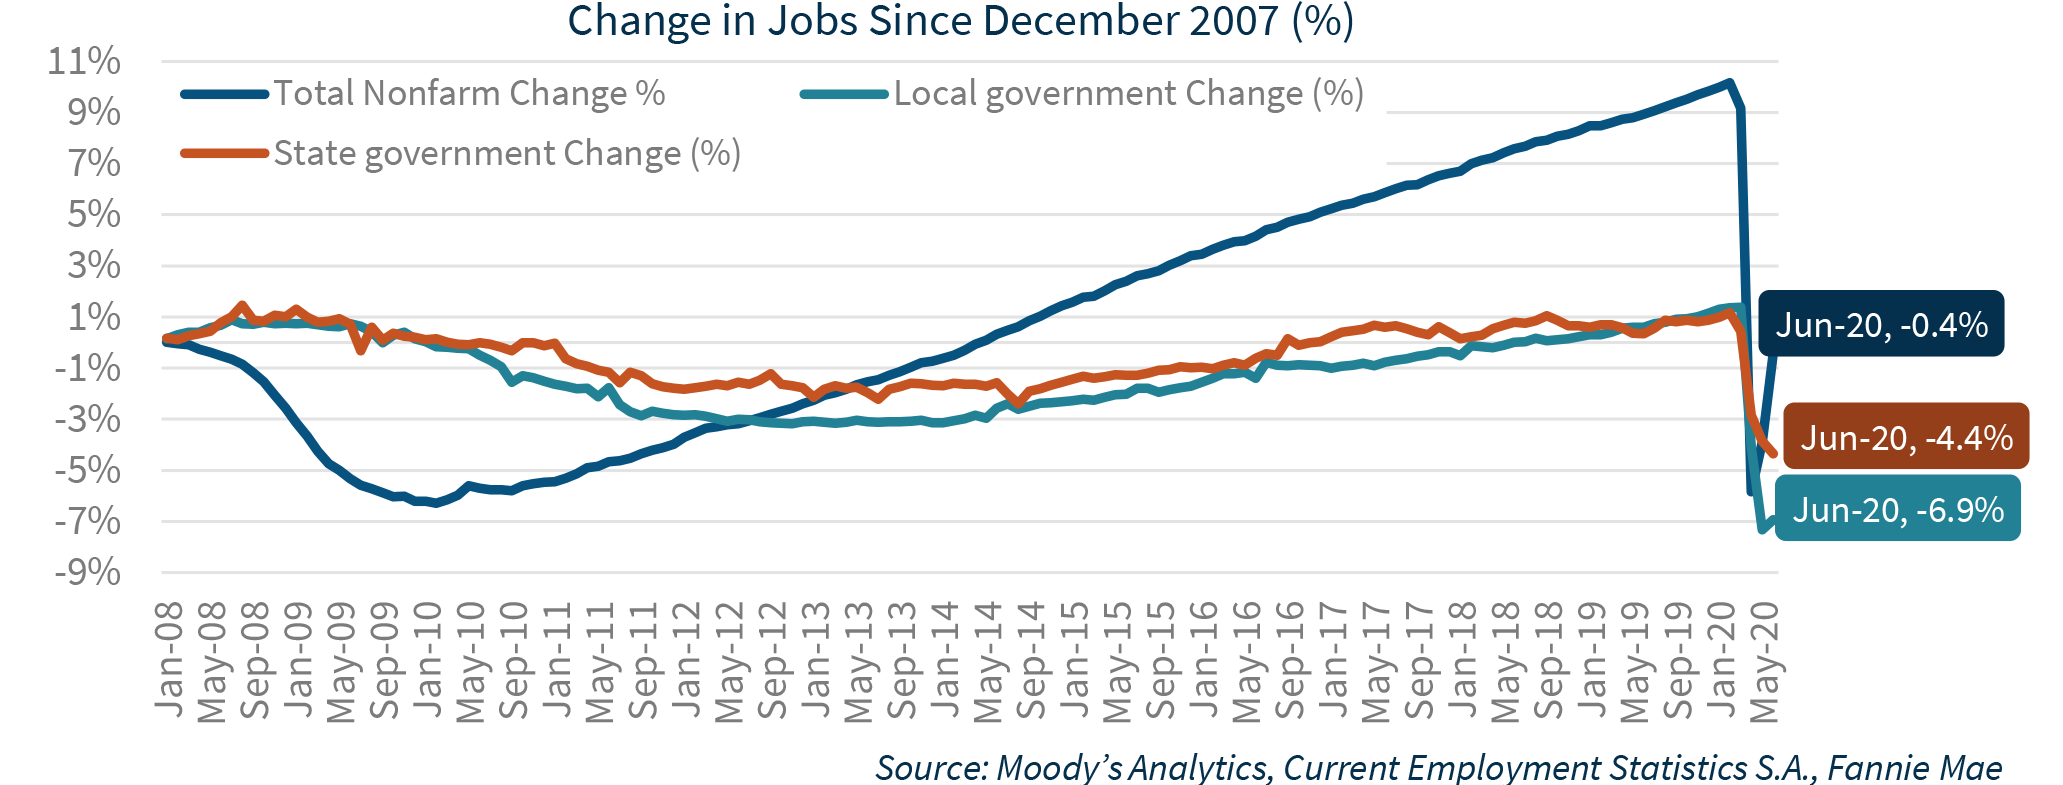 Change in Jobs Since December 2007 (%)